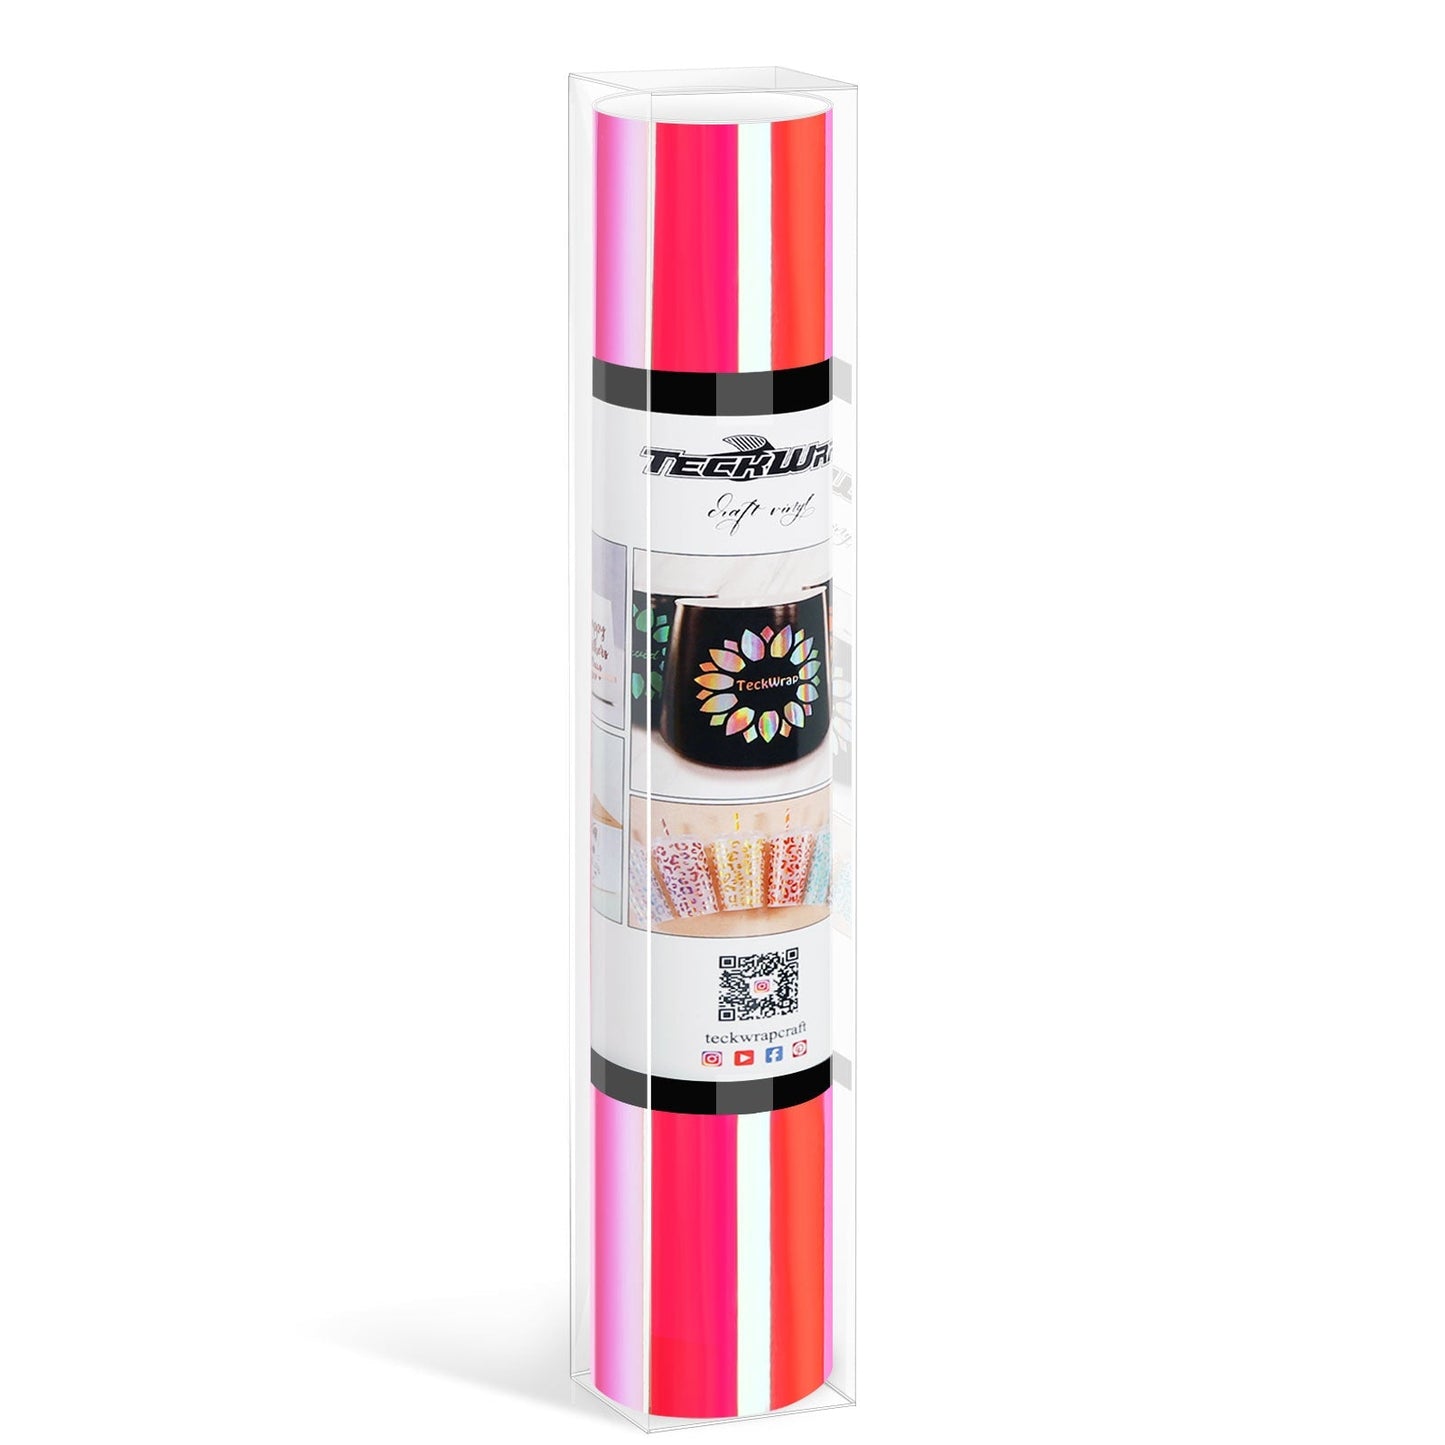 Adhesive Craft Vinyl Roll 13"x5ft - Worldwide / Opal Hot Pink - TeckwrapCraft